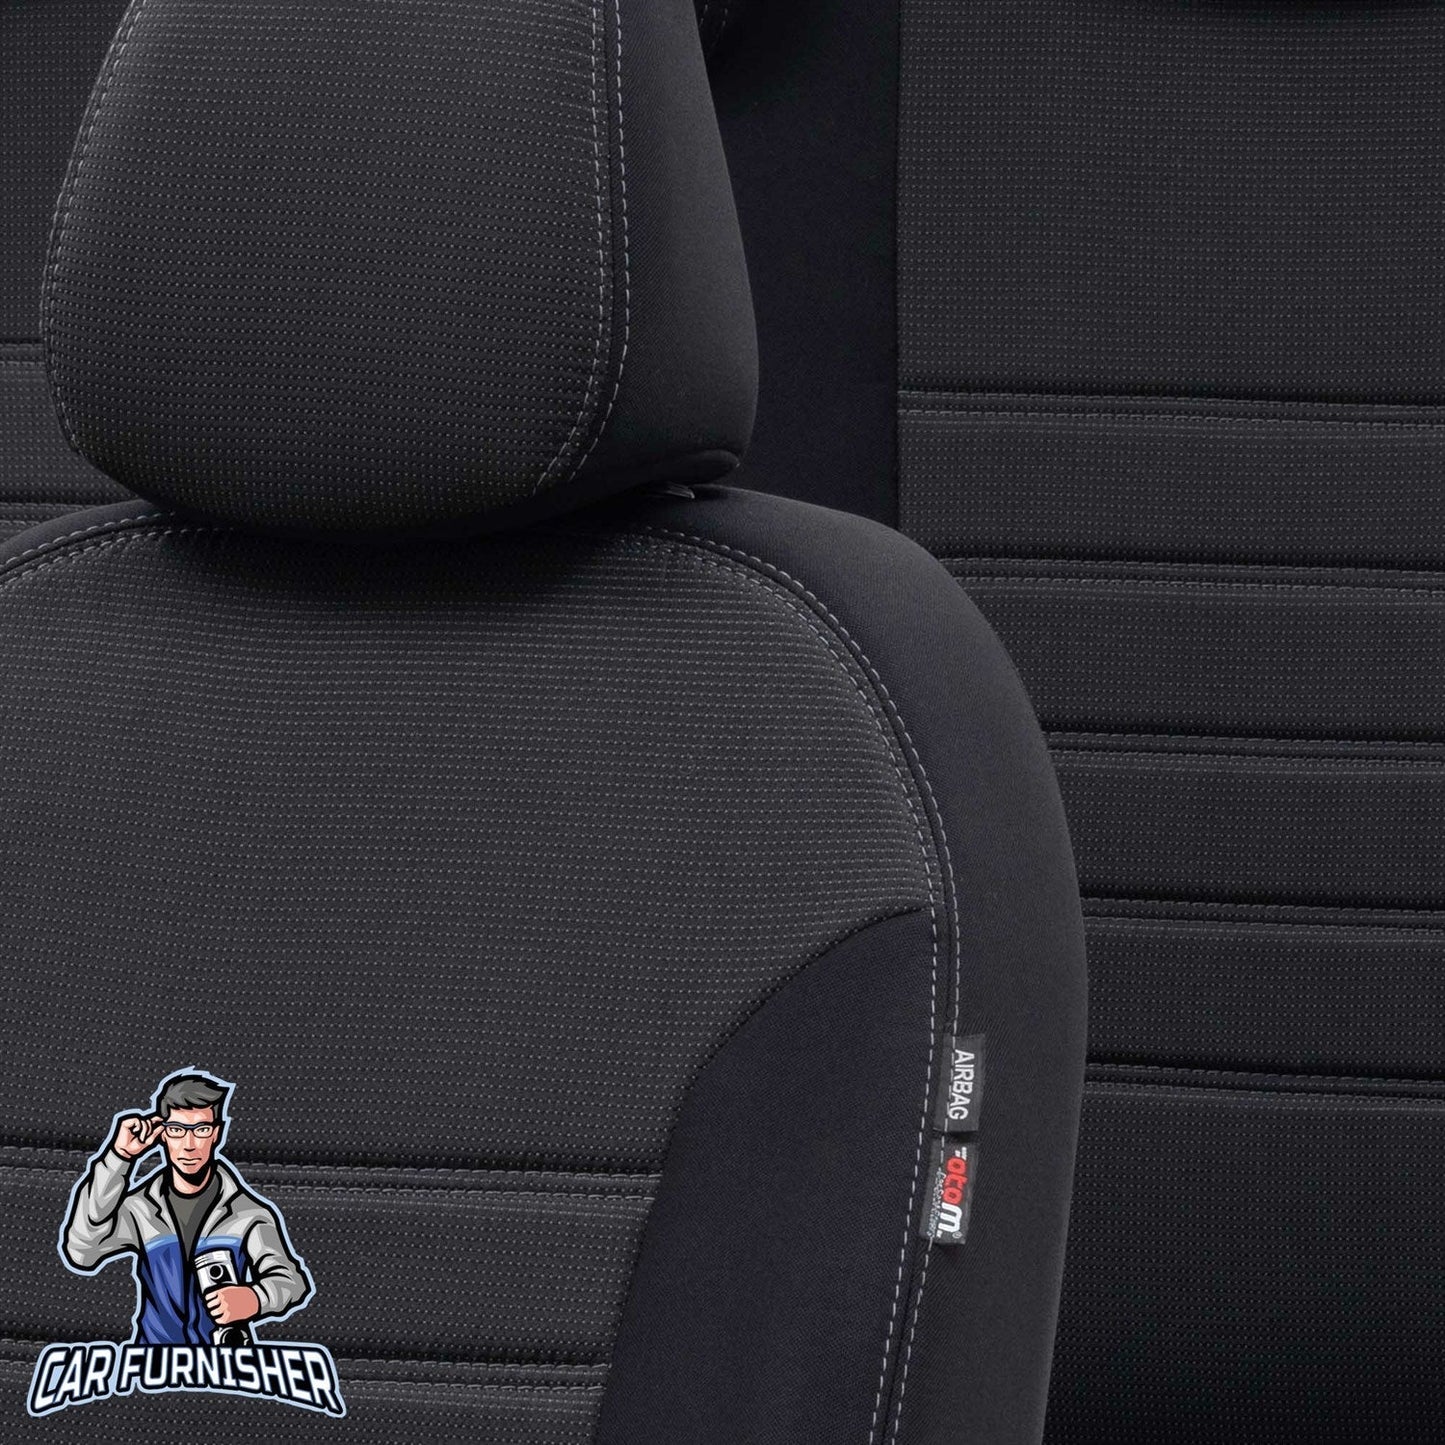 Fiat Marea Seat Covers Original Jacquard Design Dark Gray Jacquard Fabric